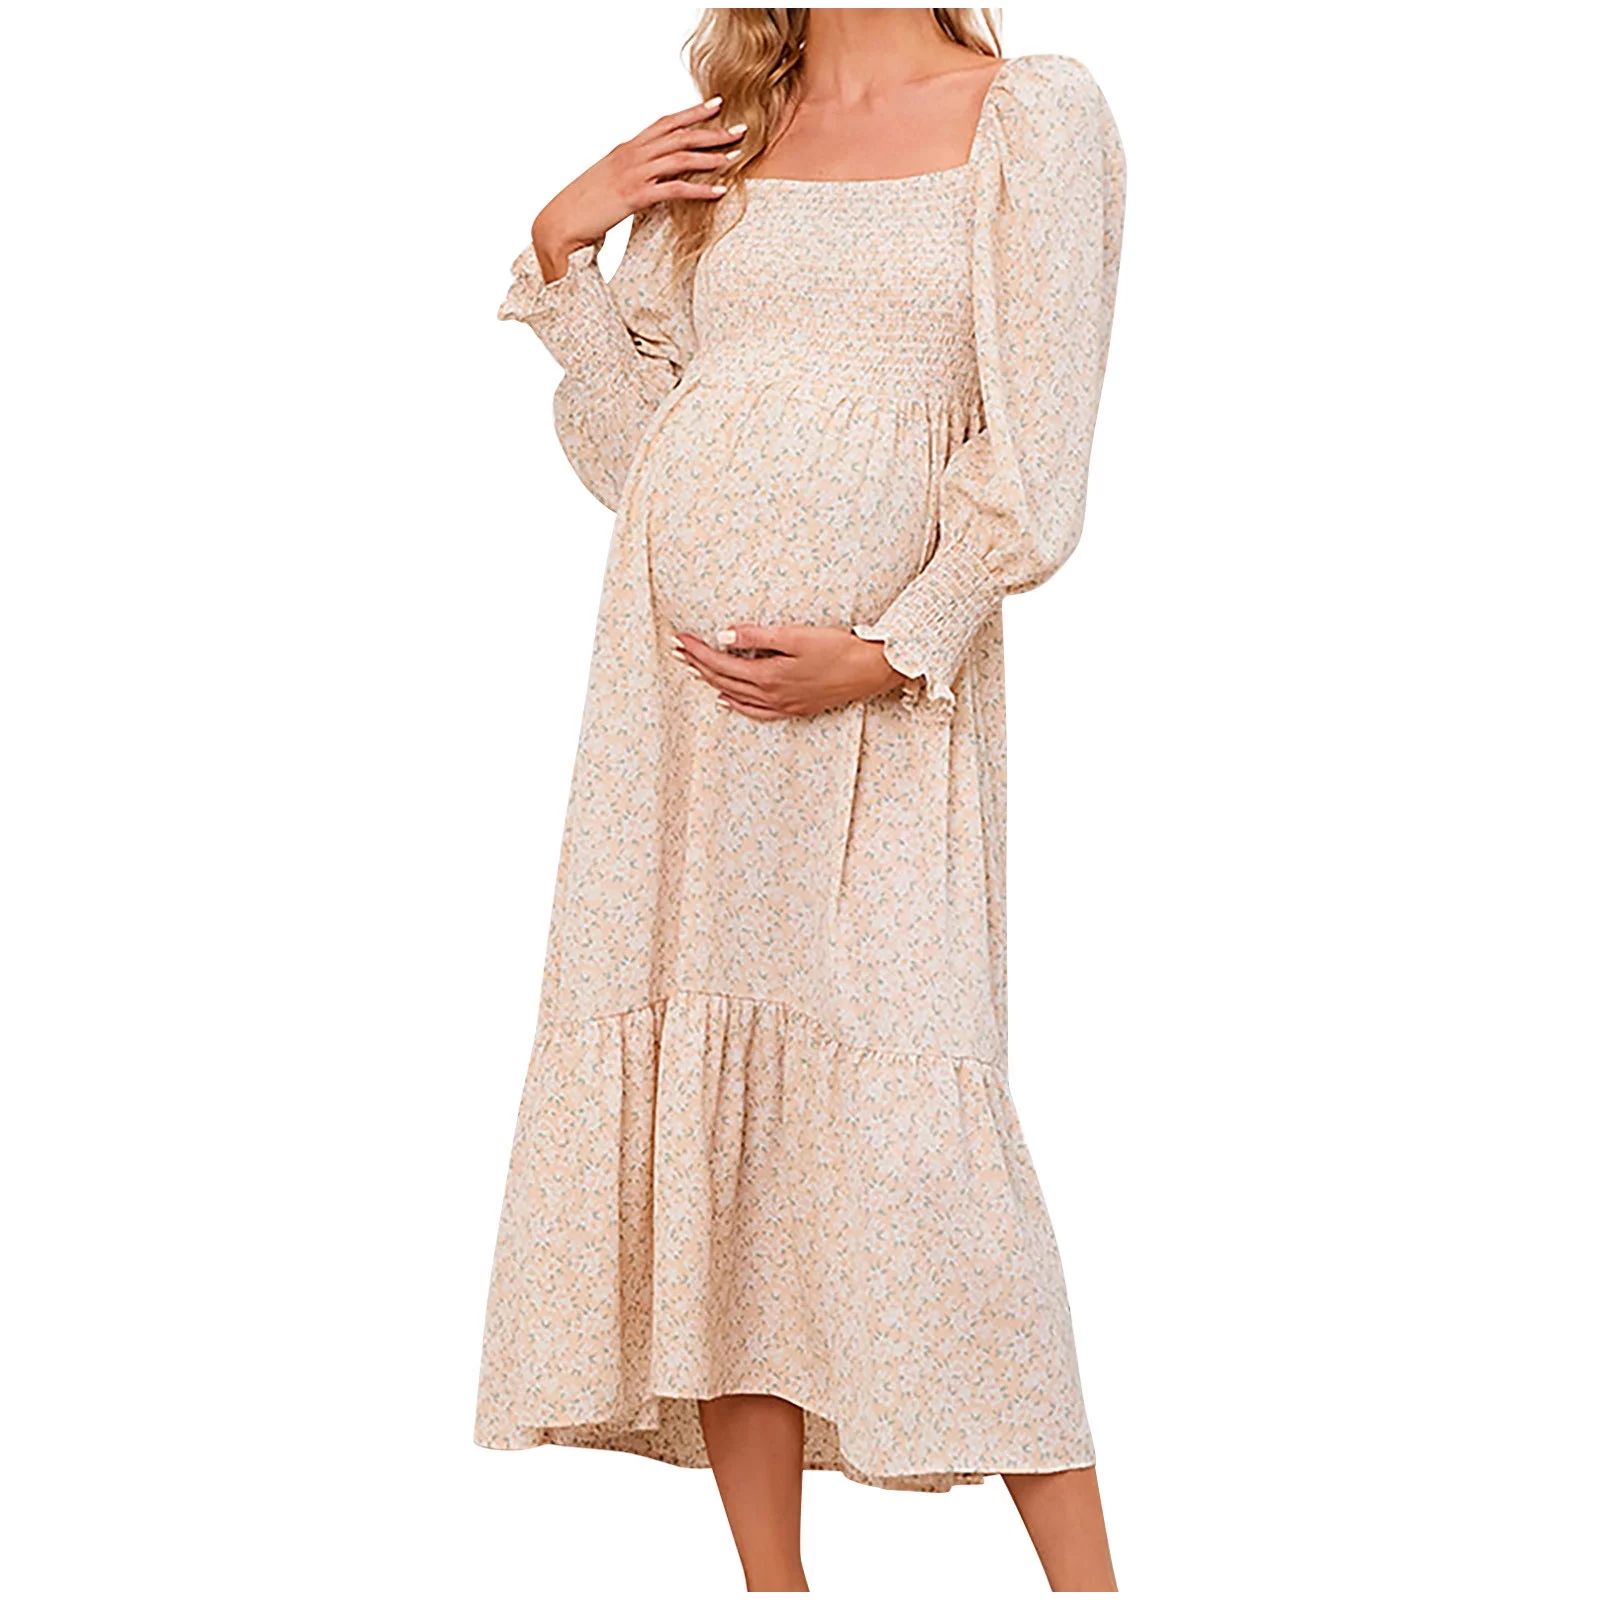 gakvov Maternity Dress For Photoshoot Savings Clearance Items!Women's Pregnant Casual Sexy Fashio... | Walmart (US)